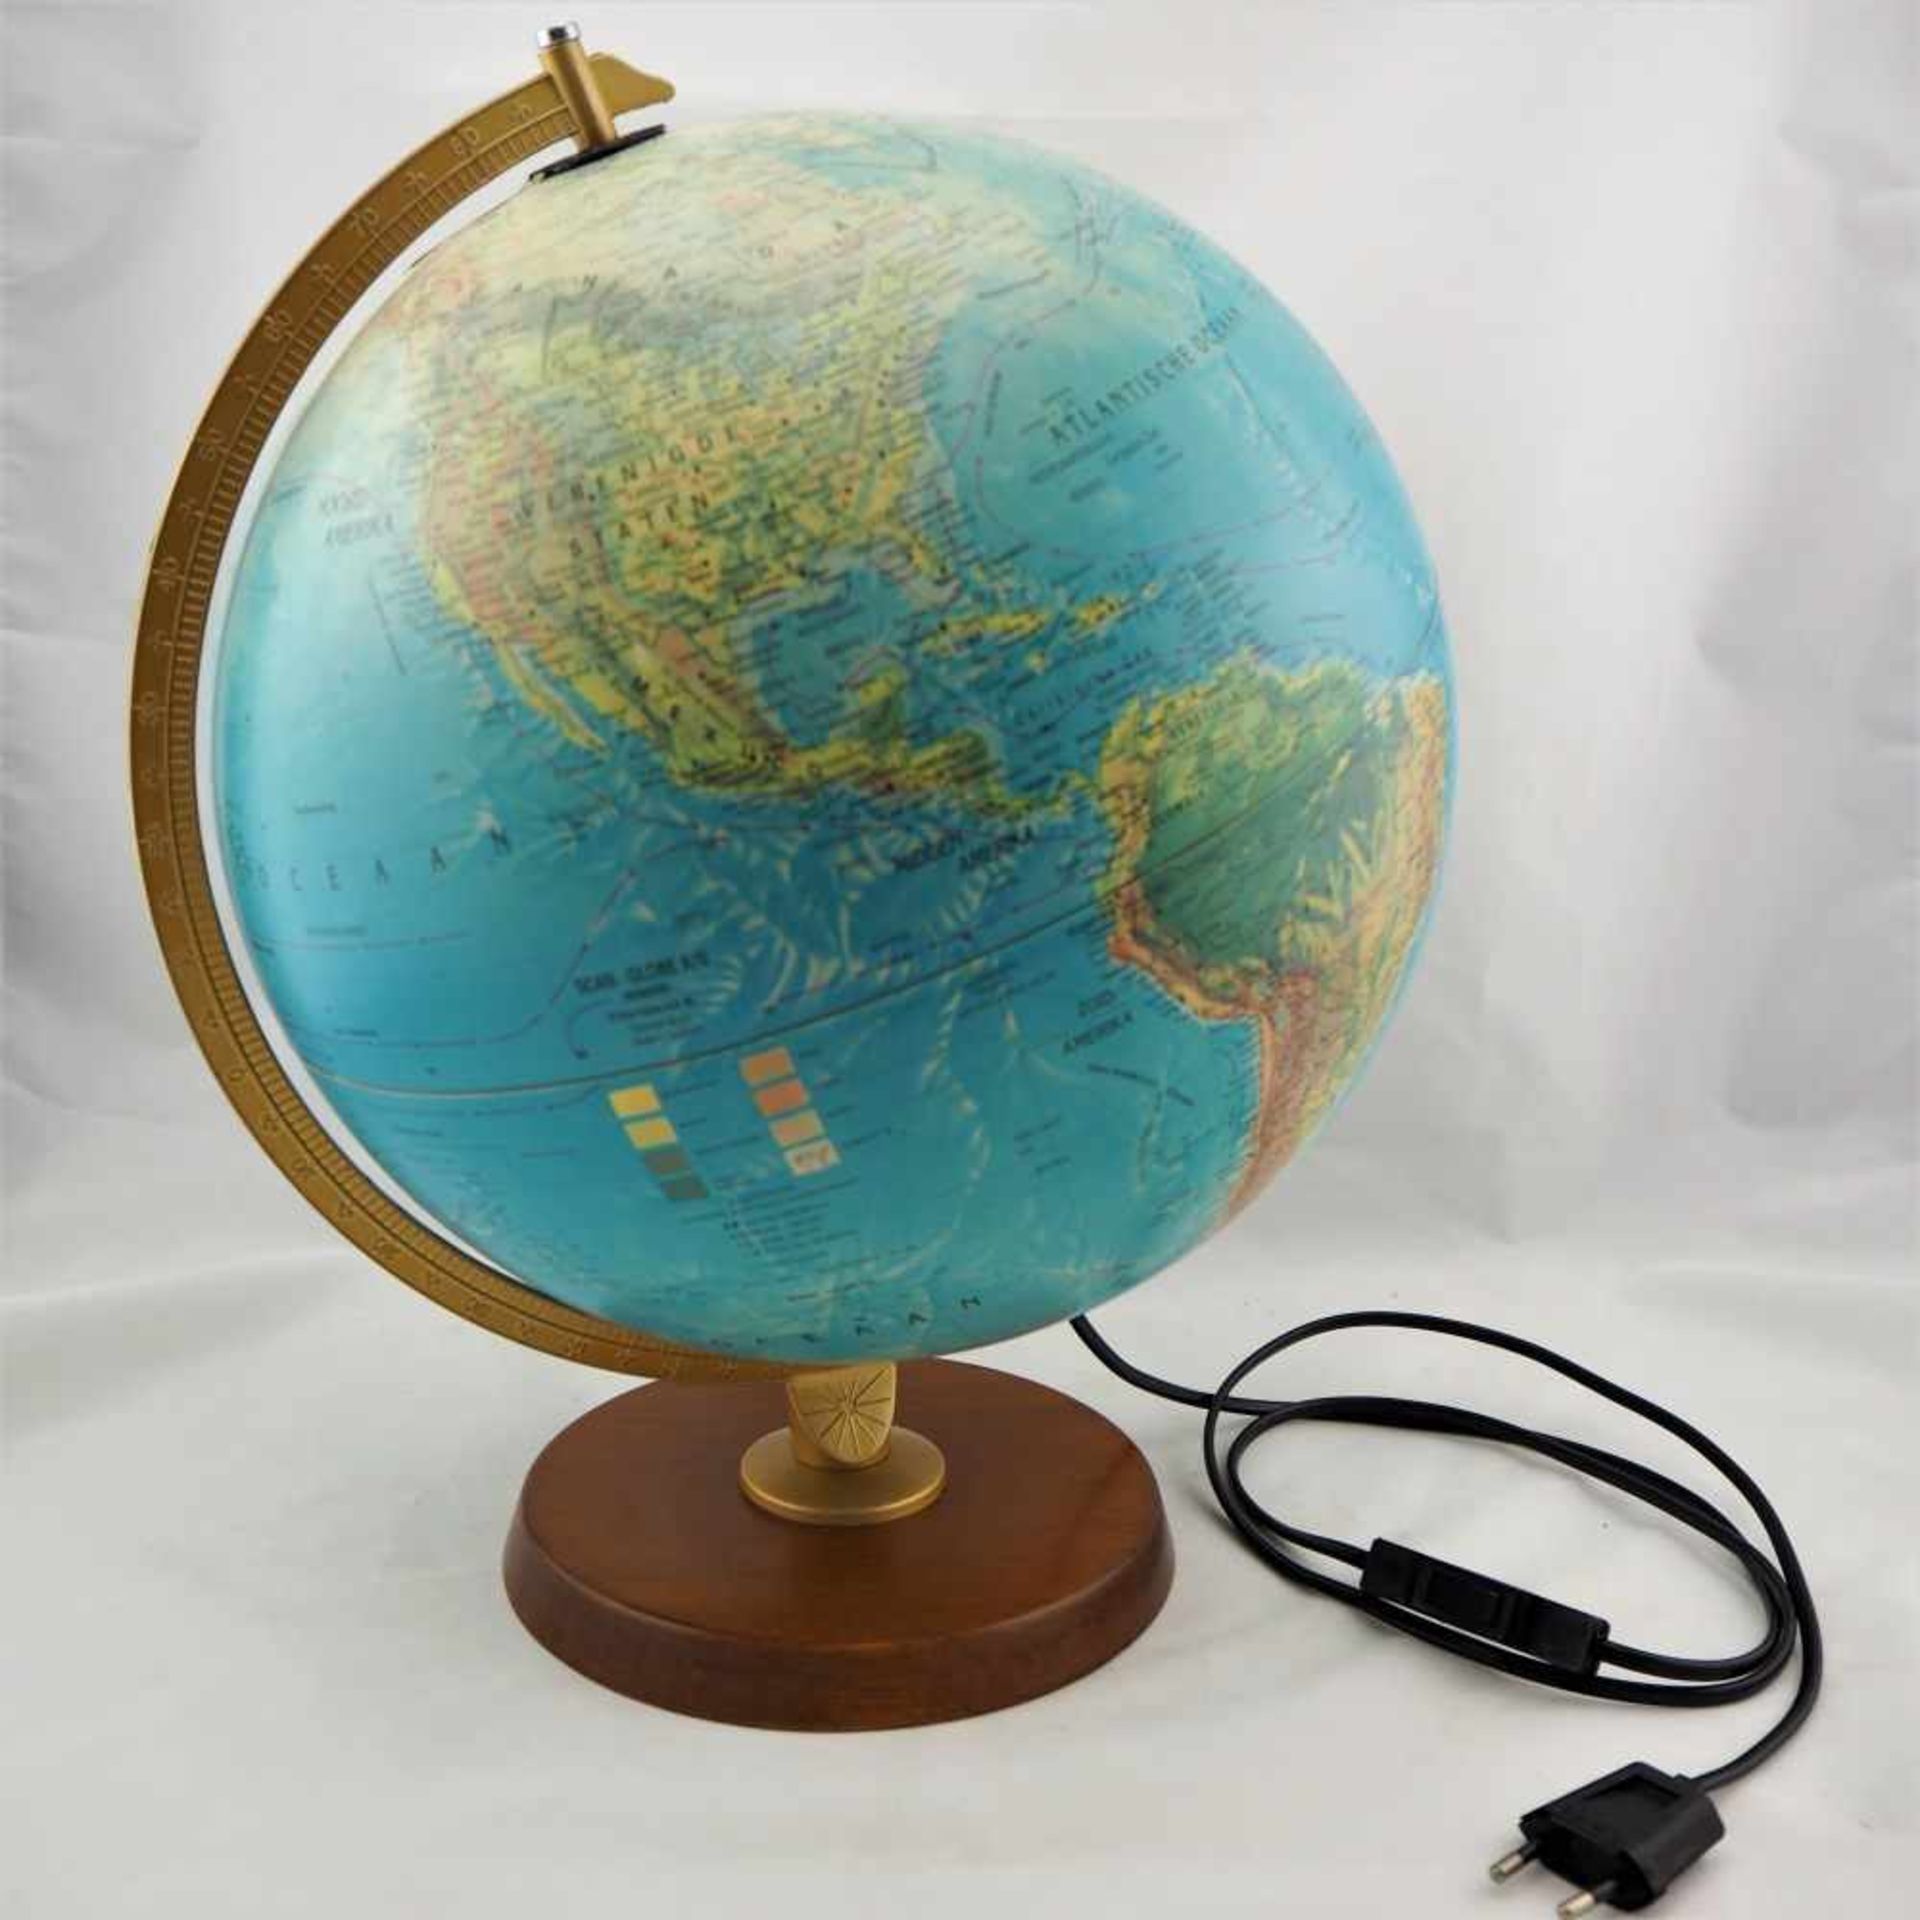 Globus, wohl 50er JahreTischglobus, um 1950. Fuß aus Holz, Halter aus Metall. Globus aus Masse.